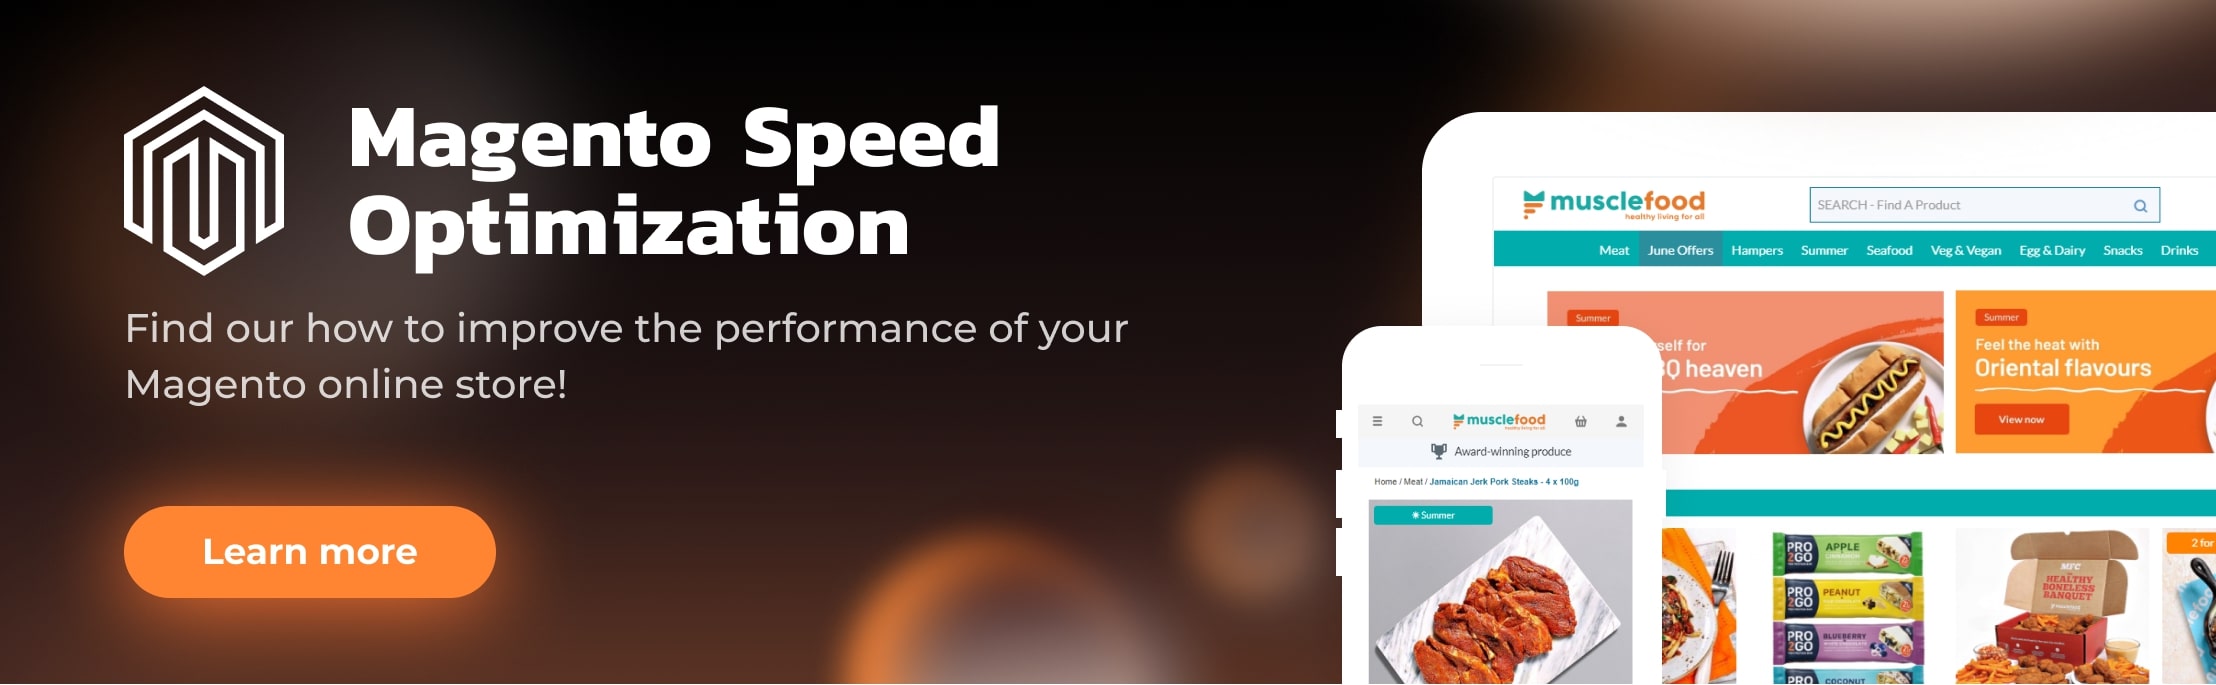 Magento Speed Optimization